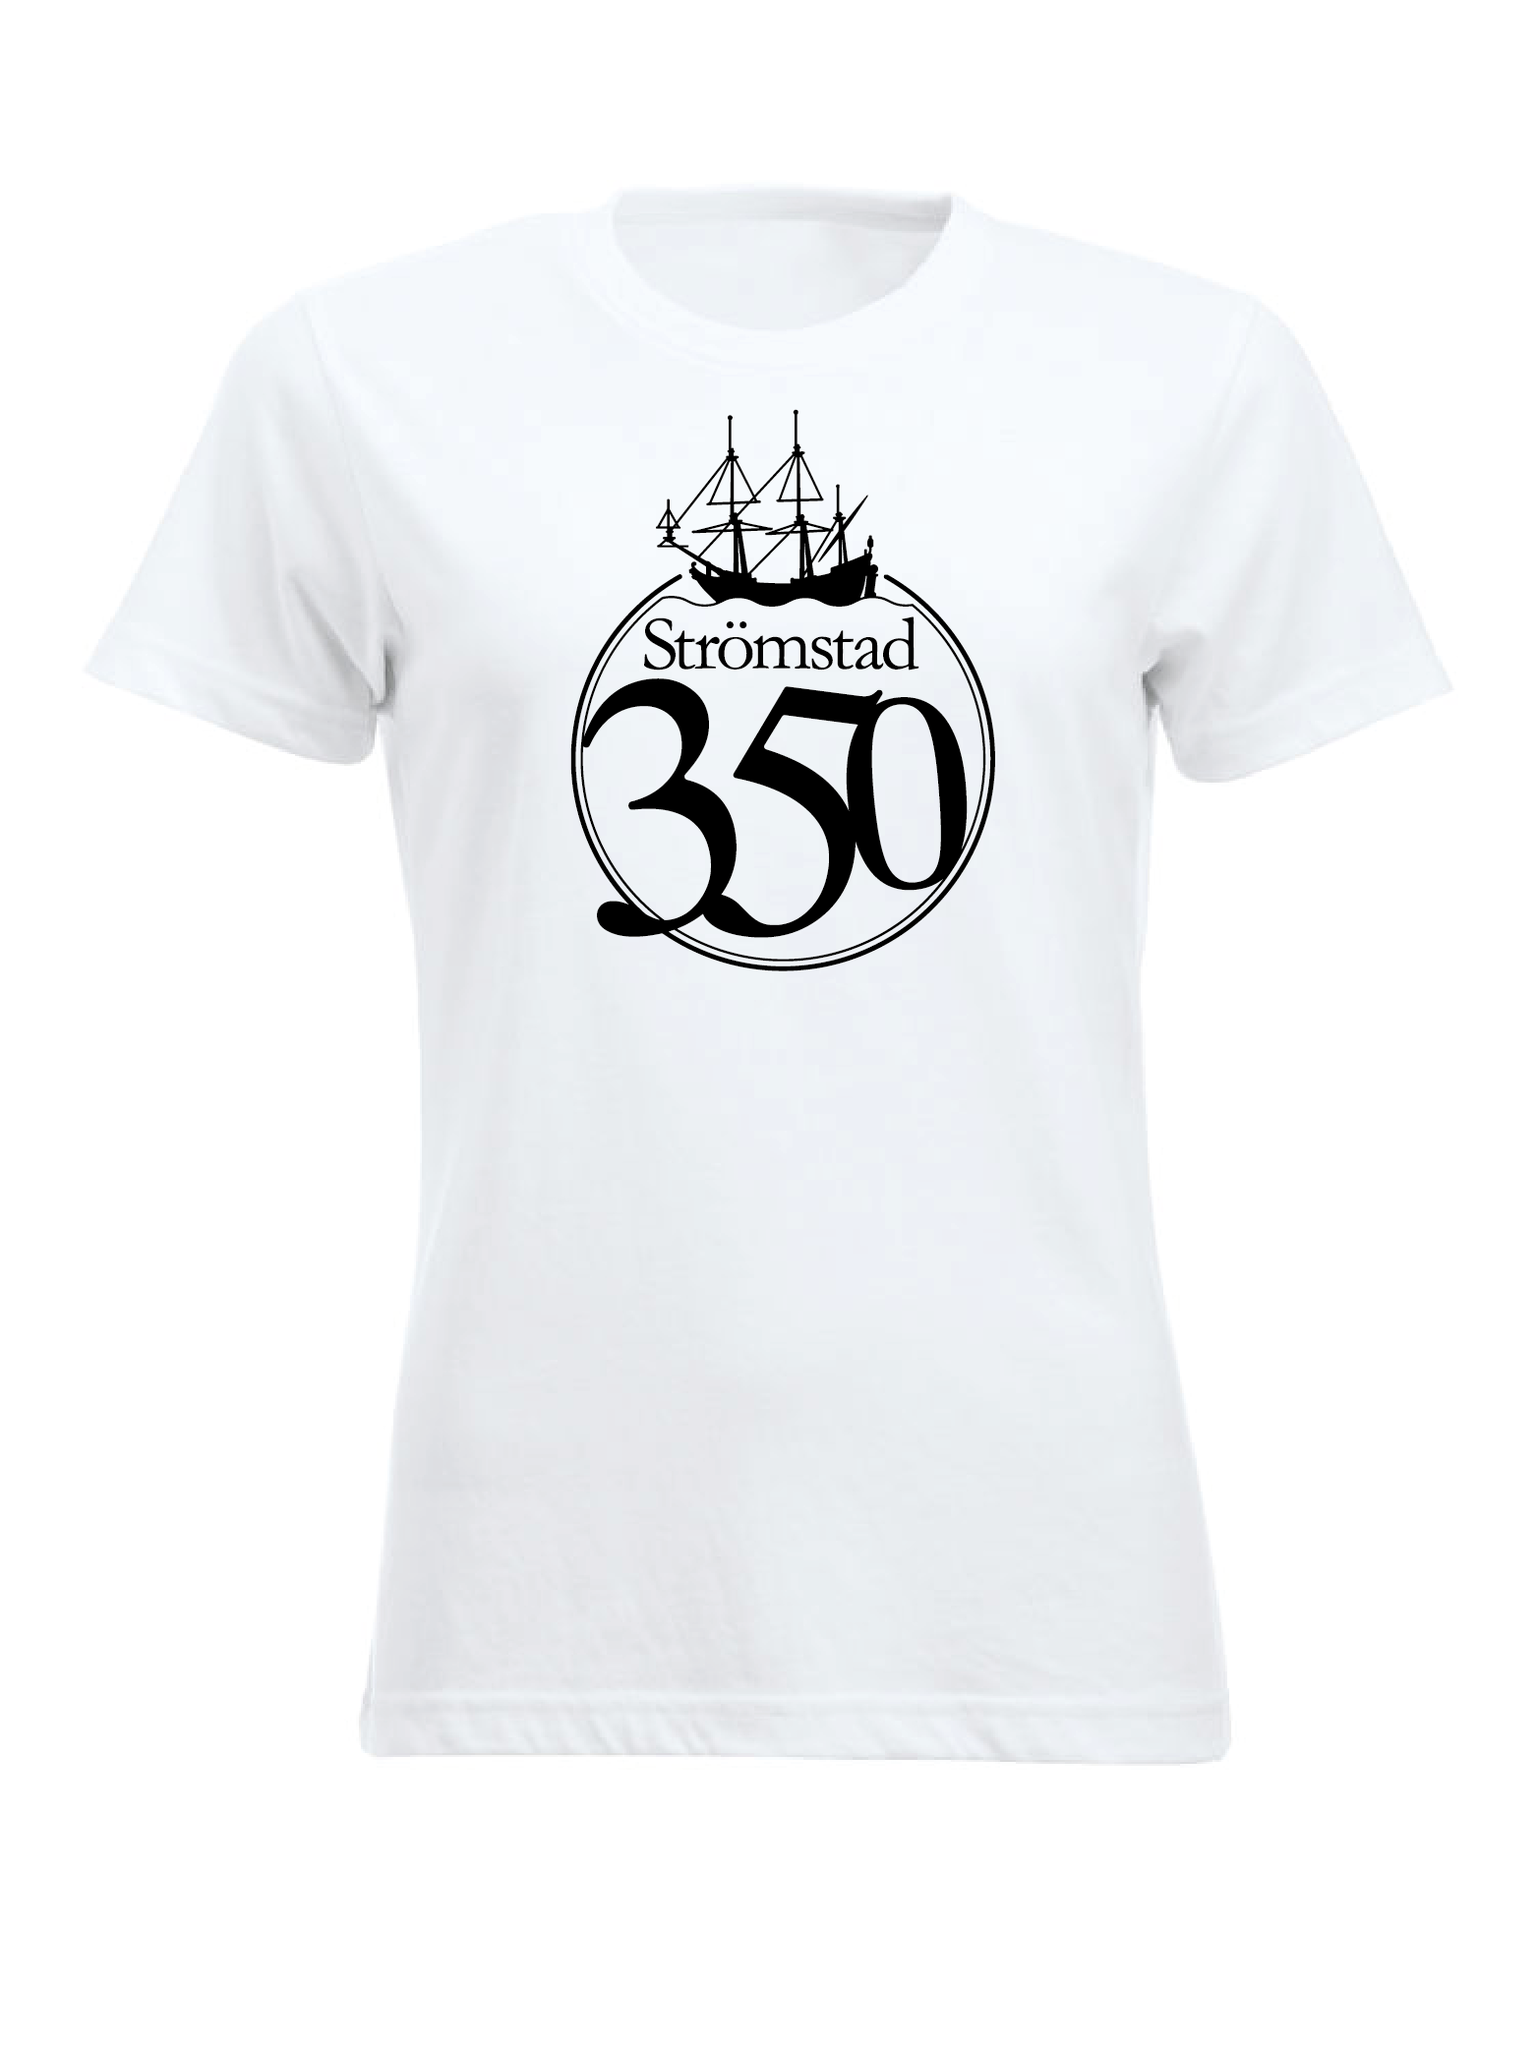 Vit Dam T-shirt "STRÖMSTAD 350 år"